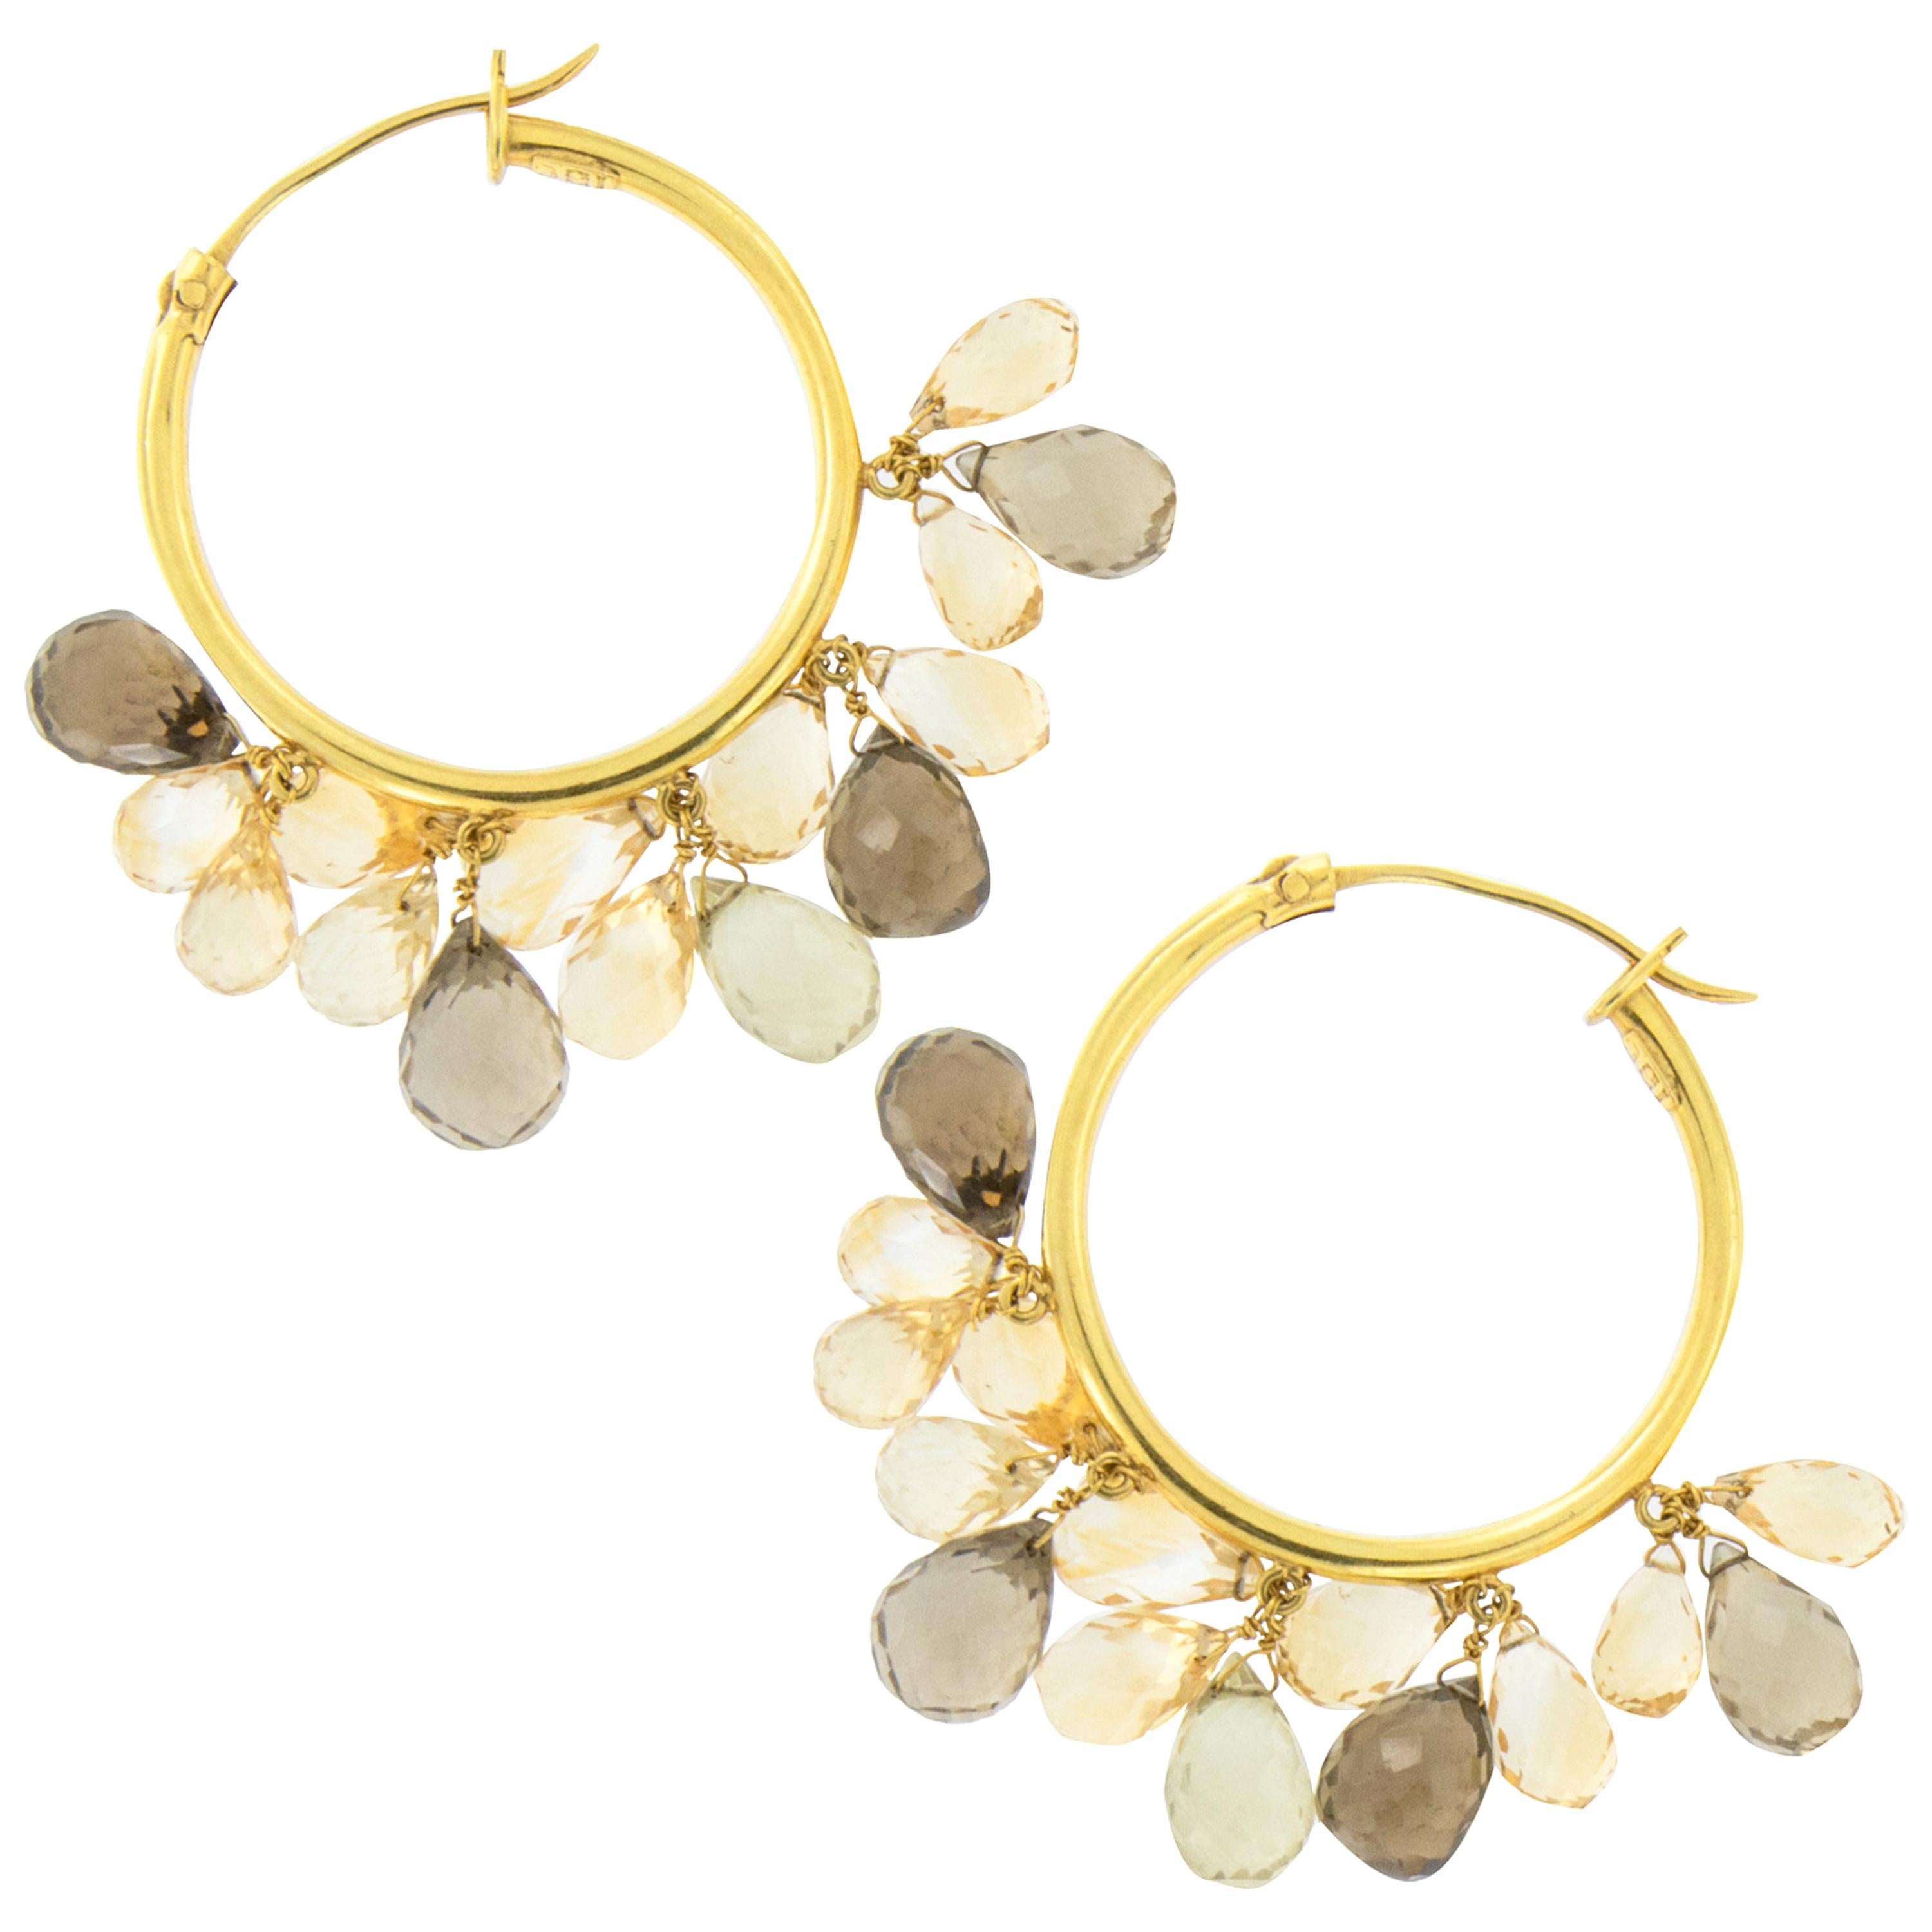 Award Winning Designer Susan Hoge 18k Gold Lemon and Smoky Quartz Hoop Earrings